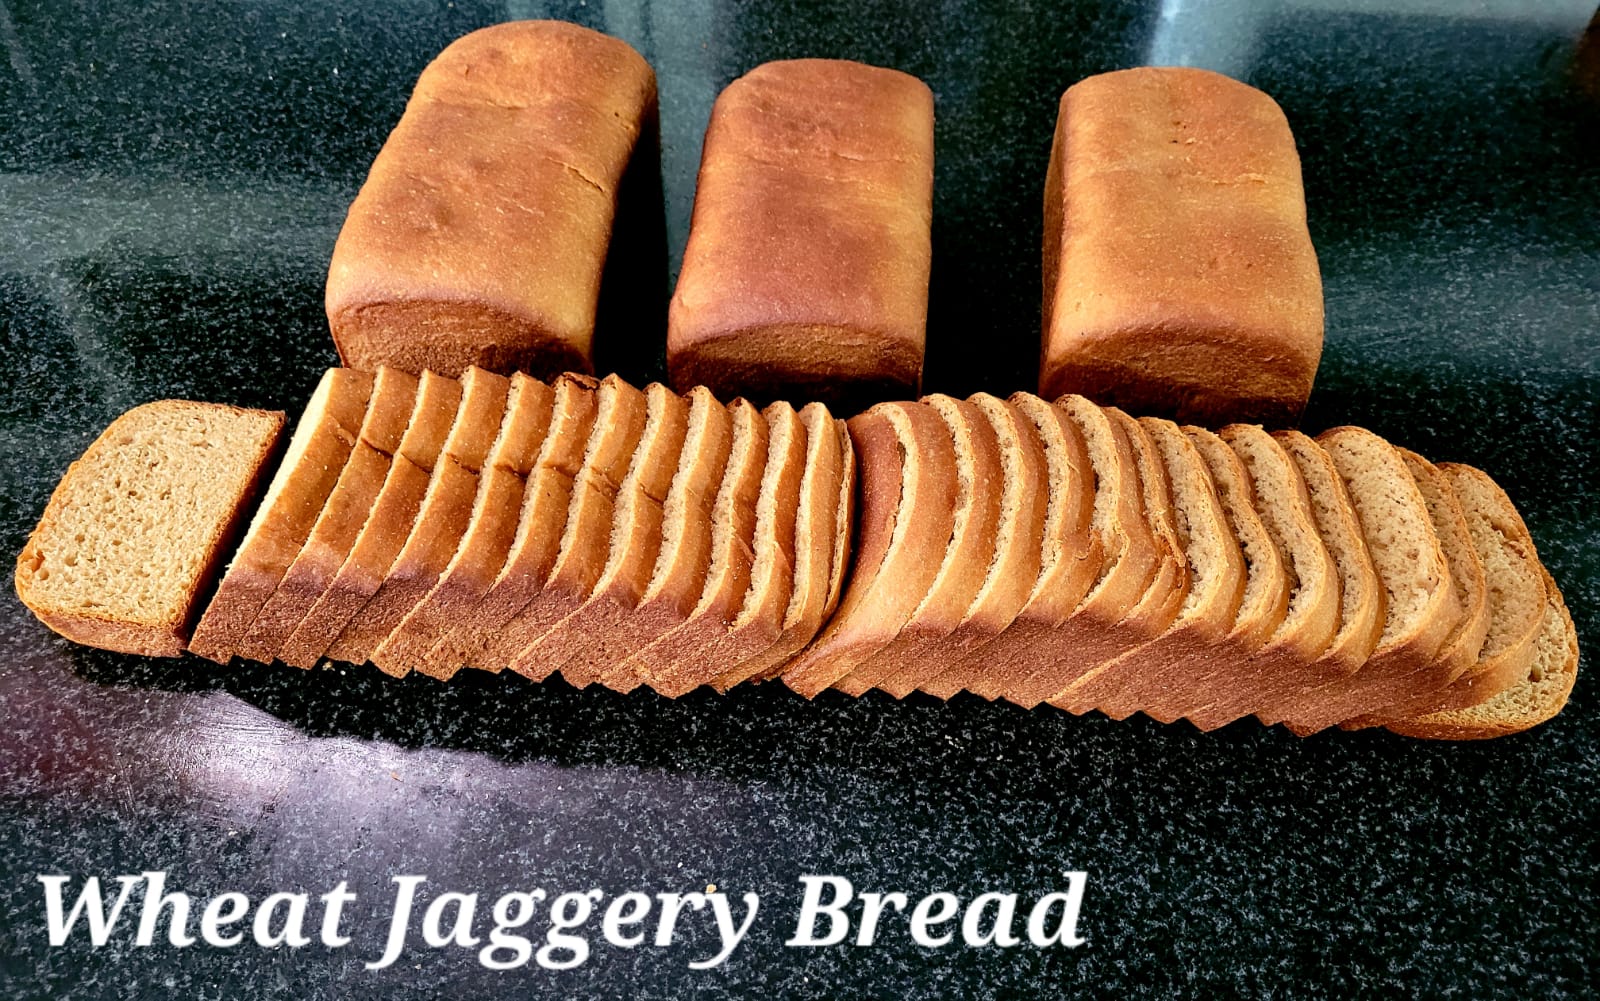 Wheat Jaggery Bread